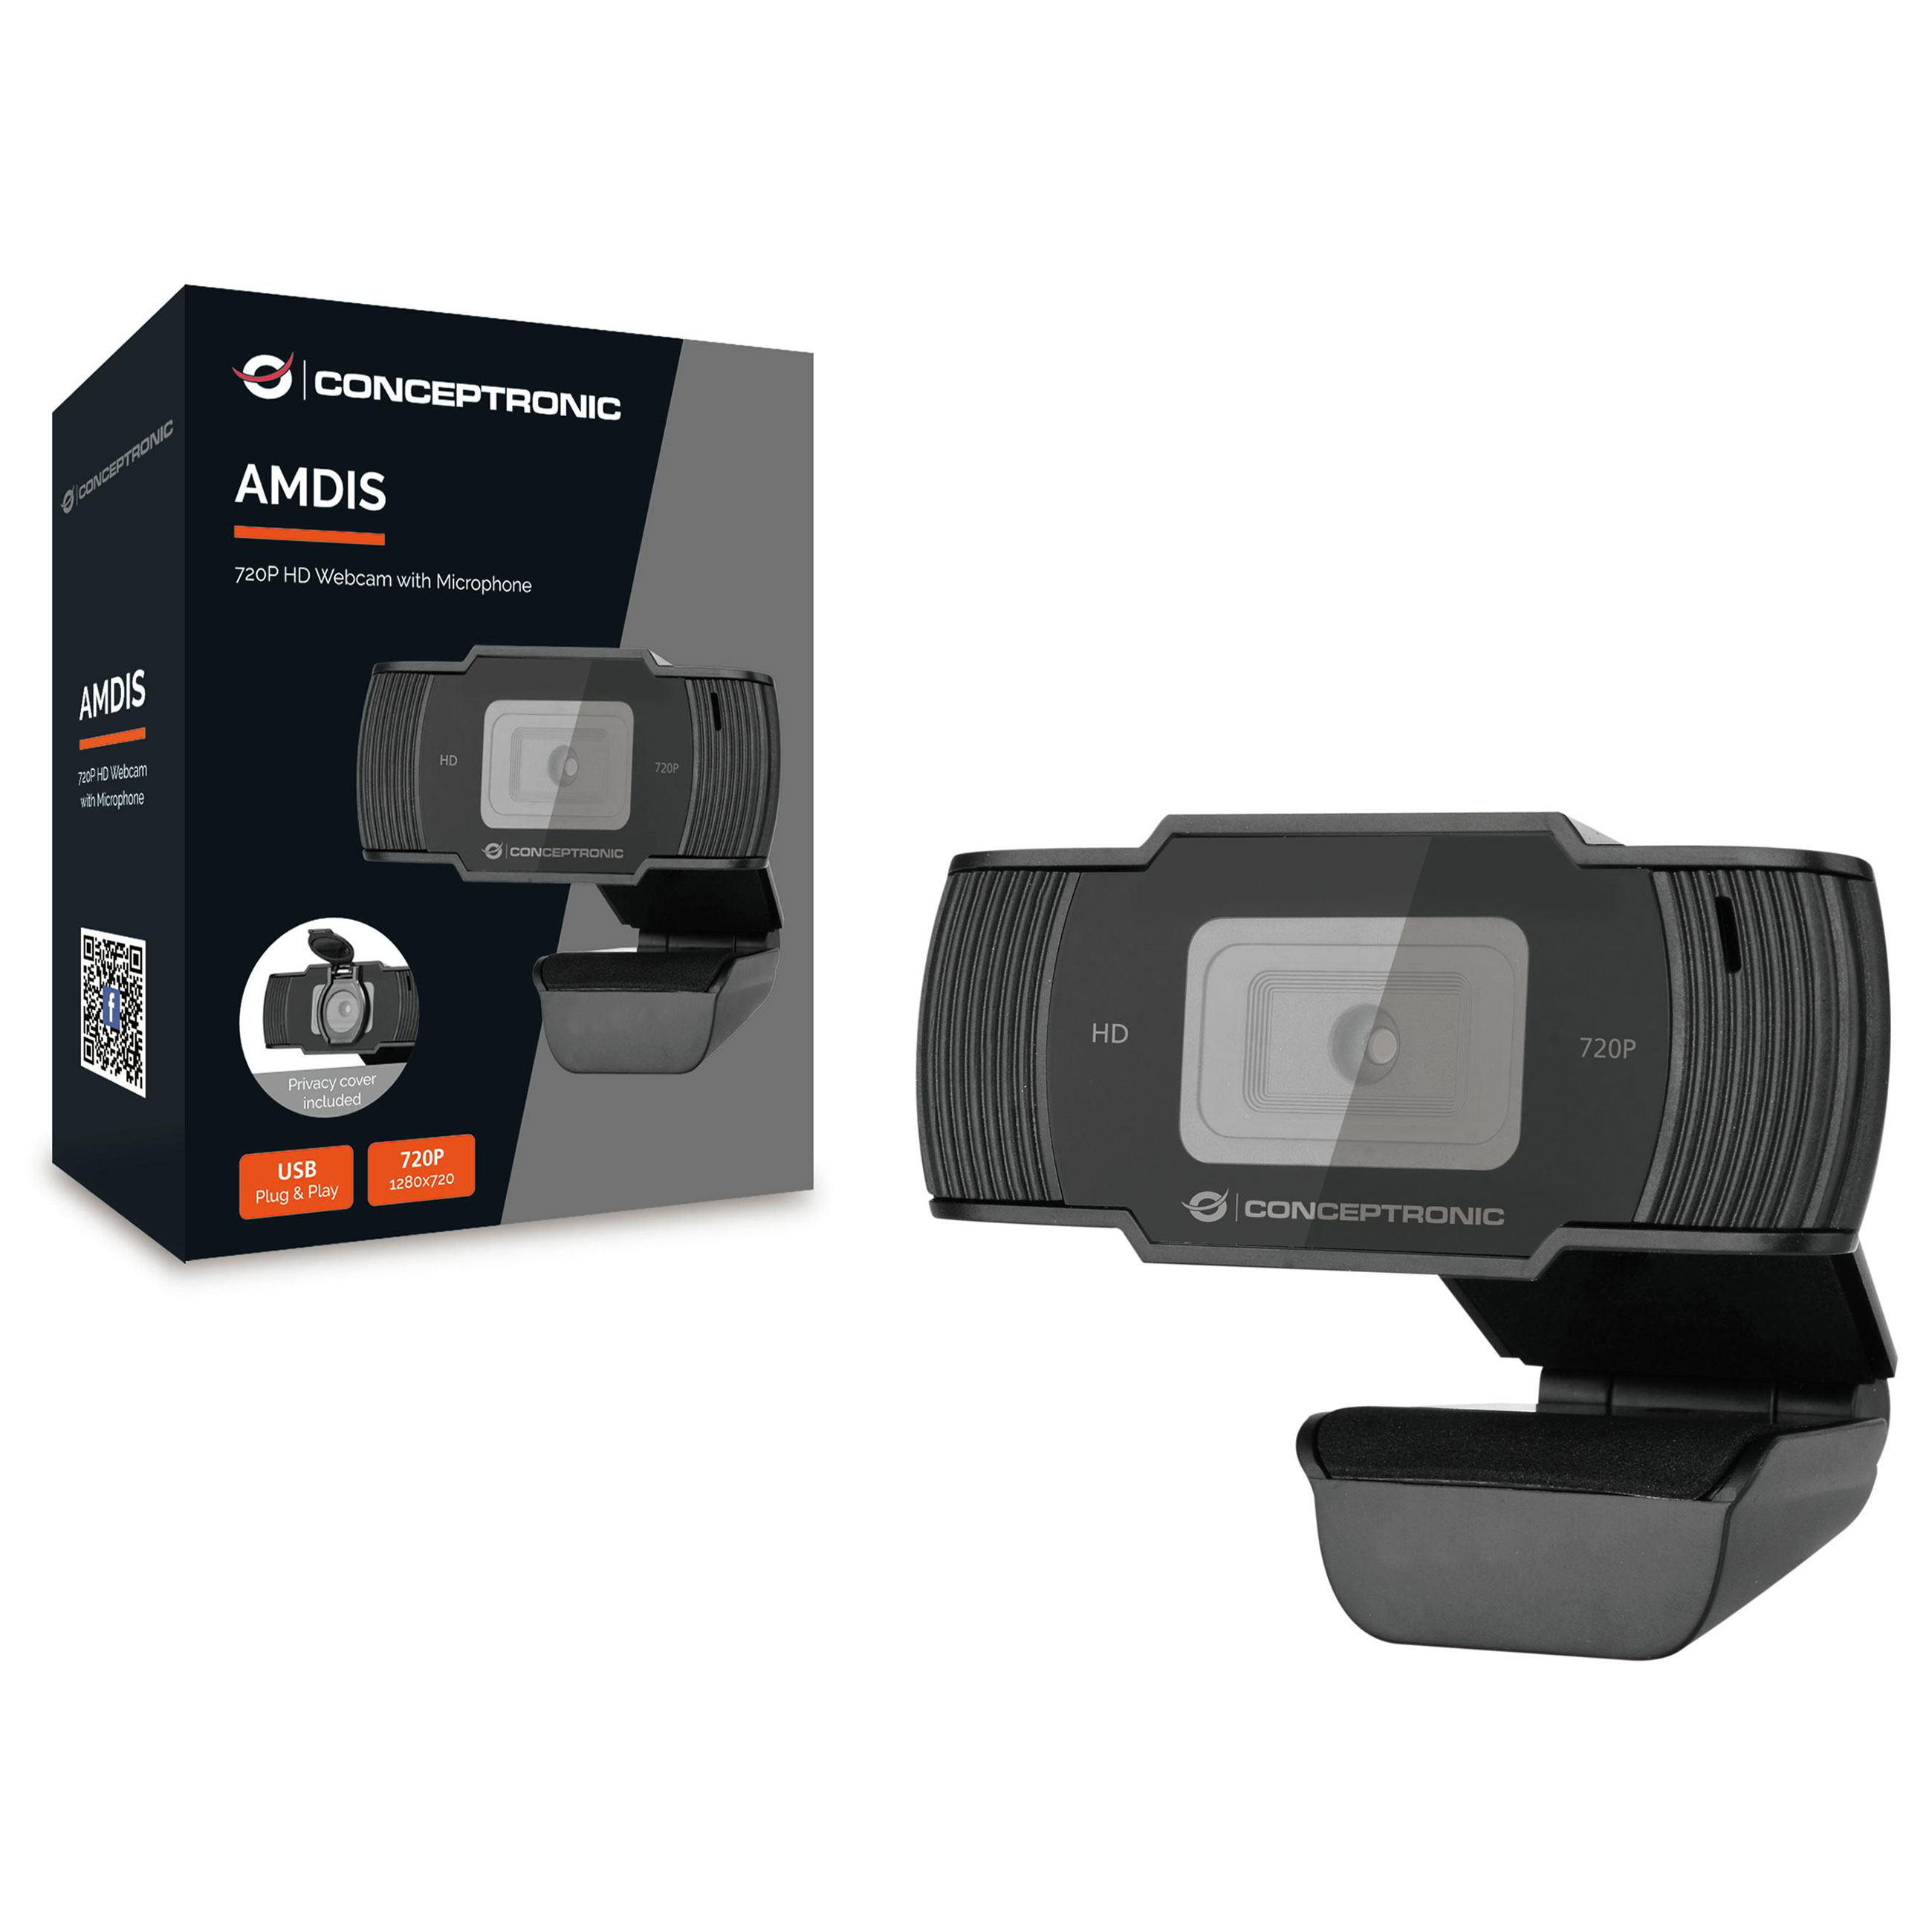  Conceptronic AMDIS03B - Full HD Webcam